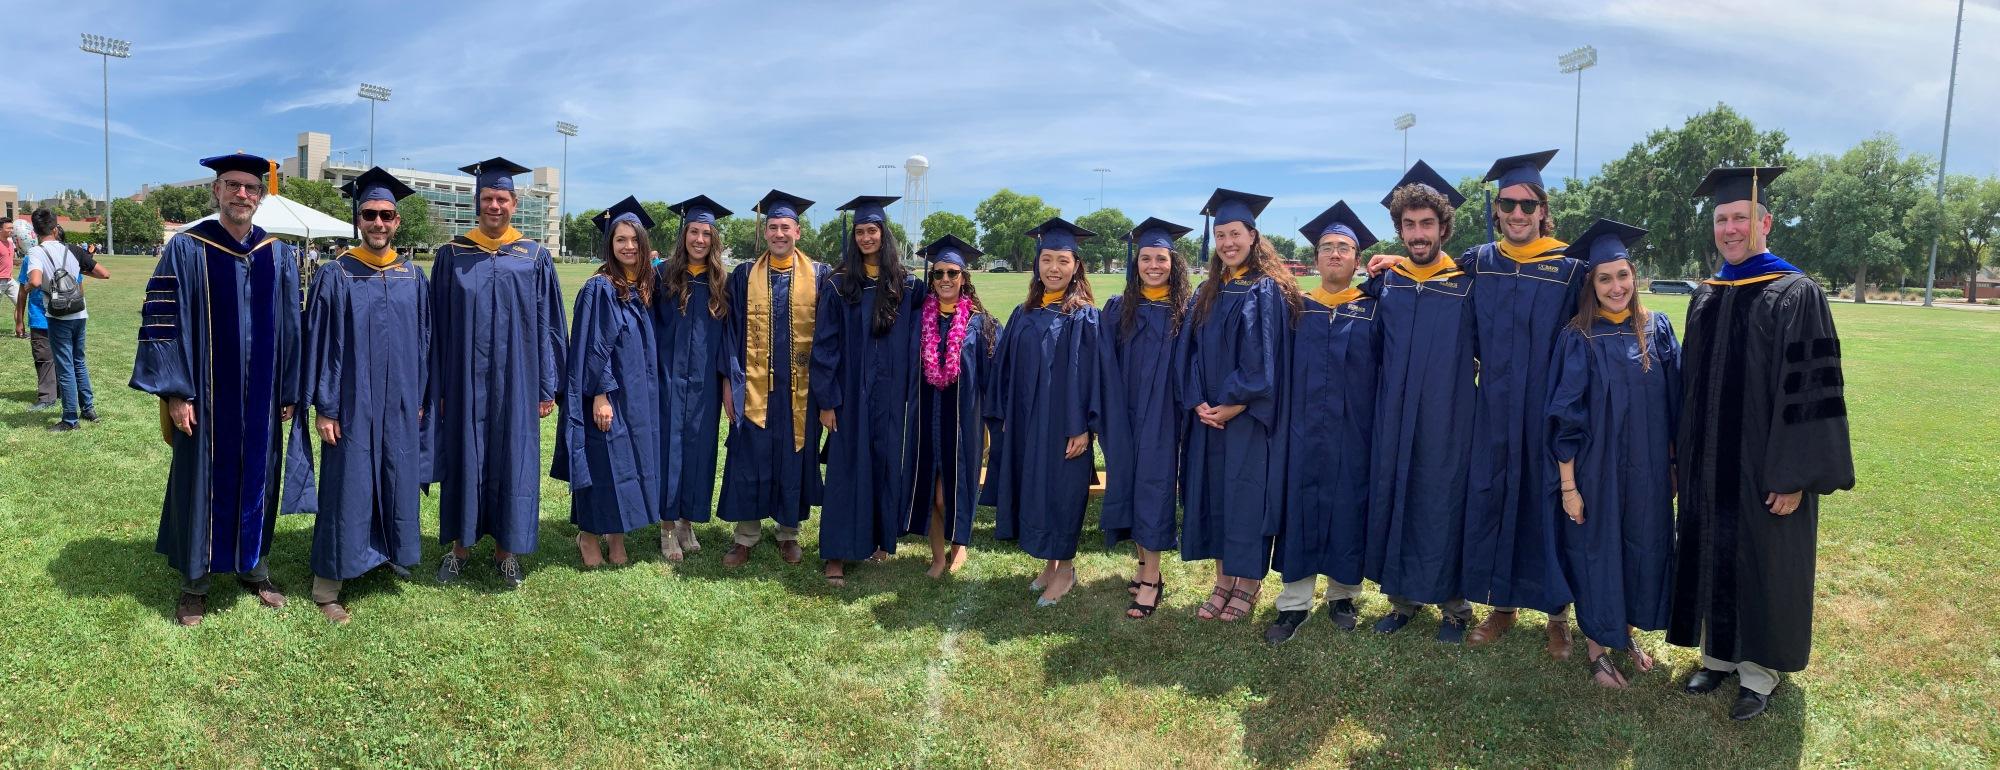 Graduate Group of 2019